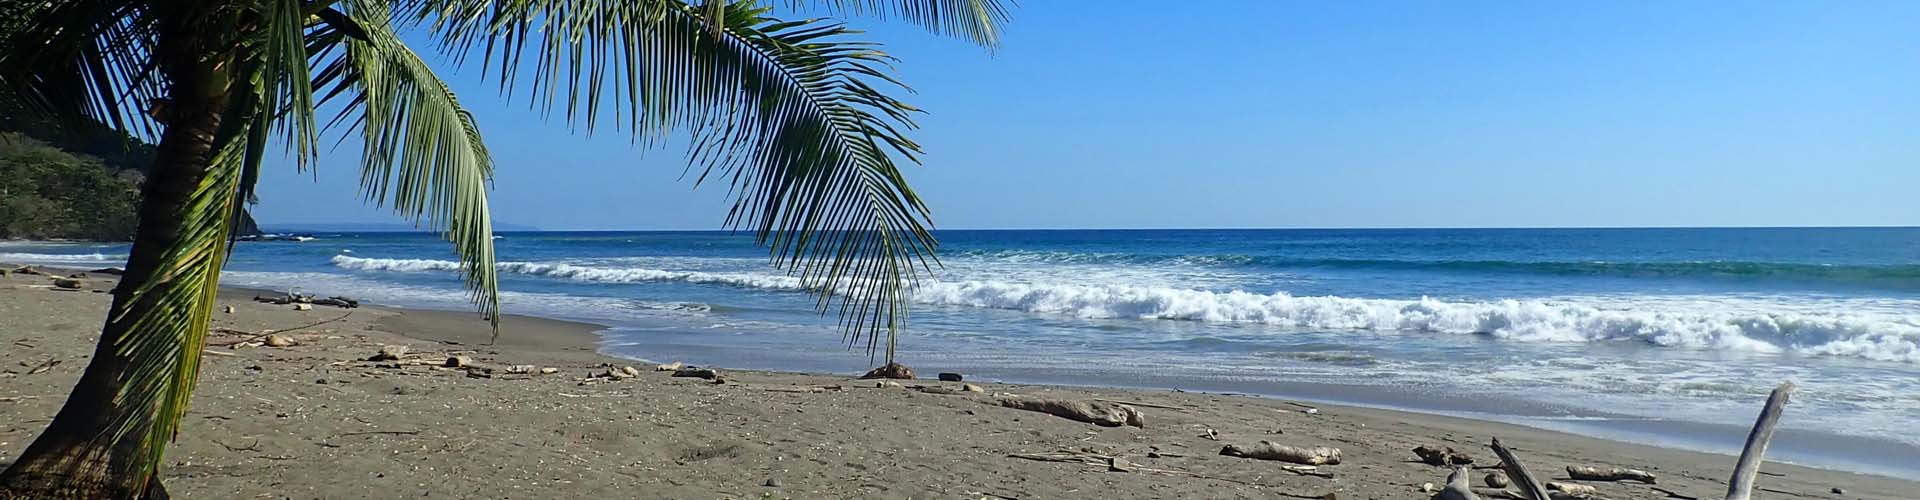 Sunbathing on the Costa Rican beaches